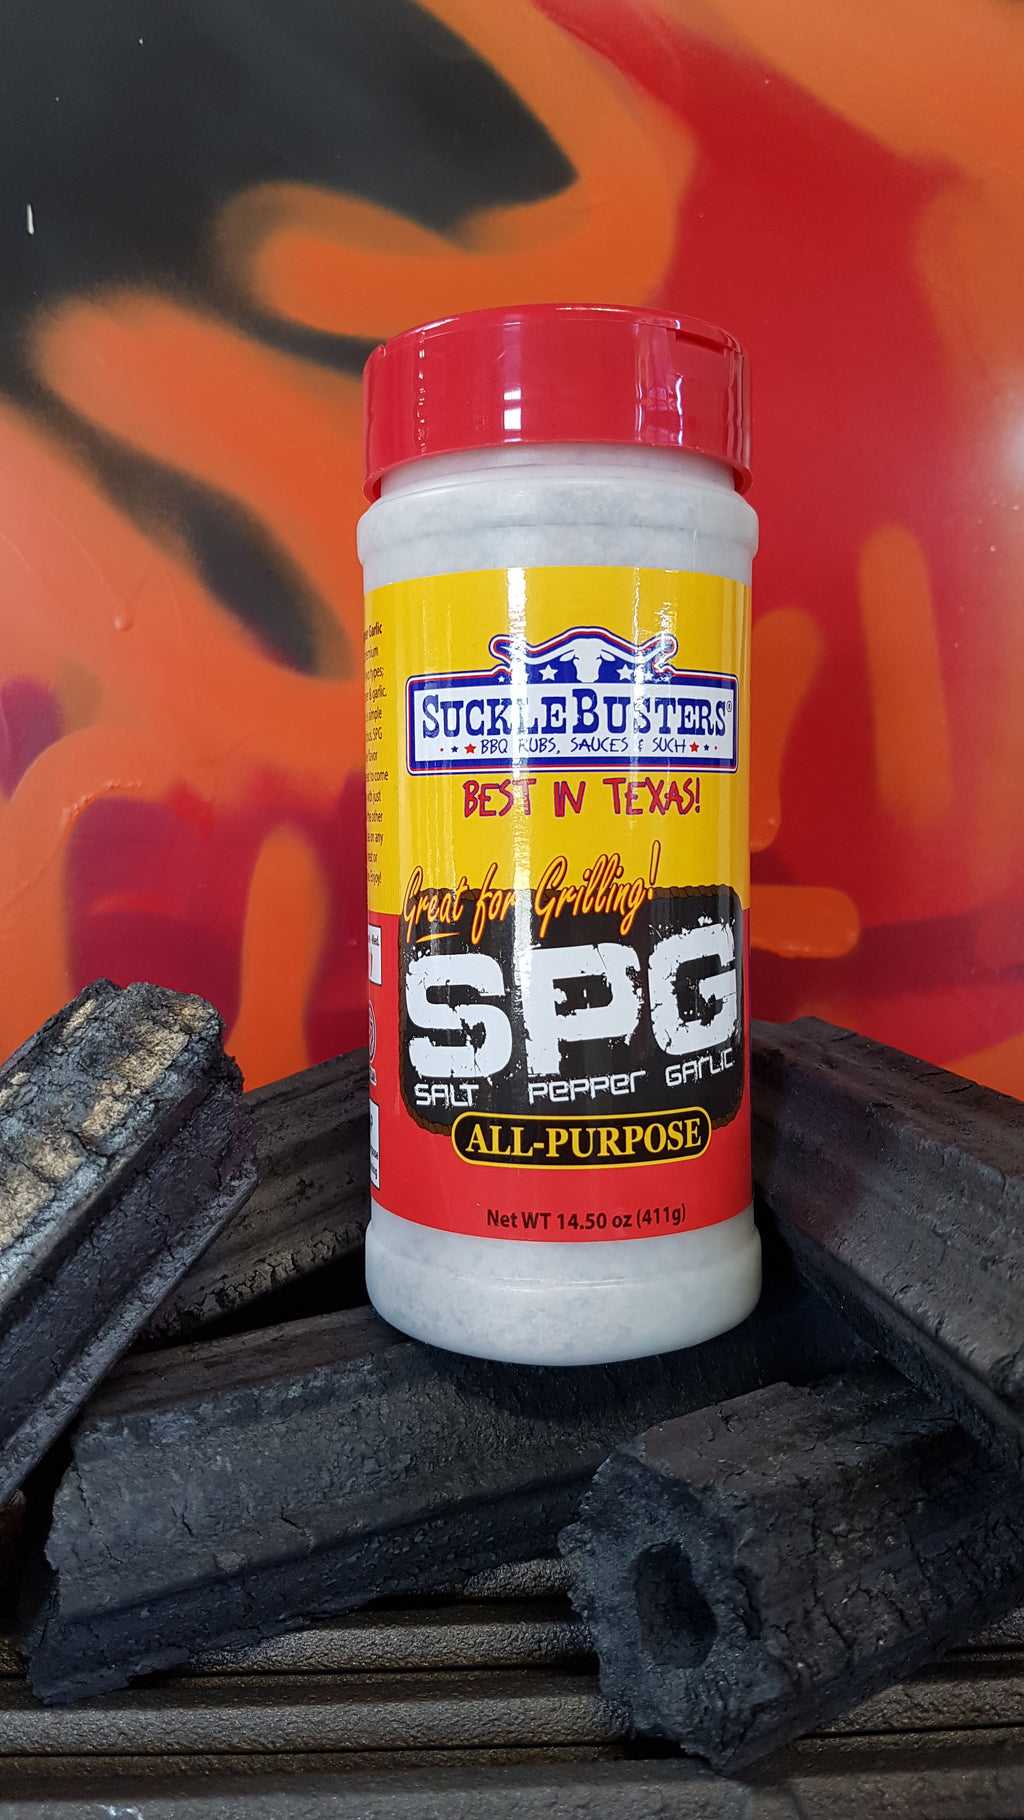 Salt Pepper Garlic All Purpose 411g by Sucklebusters